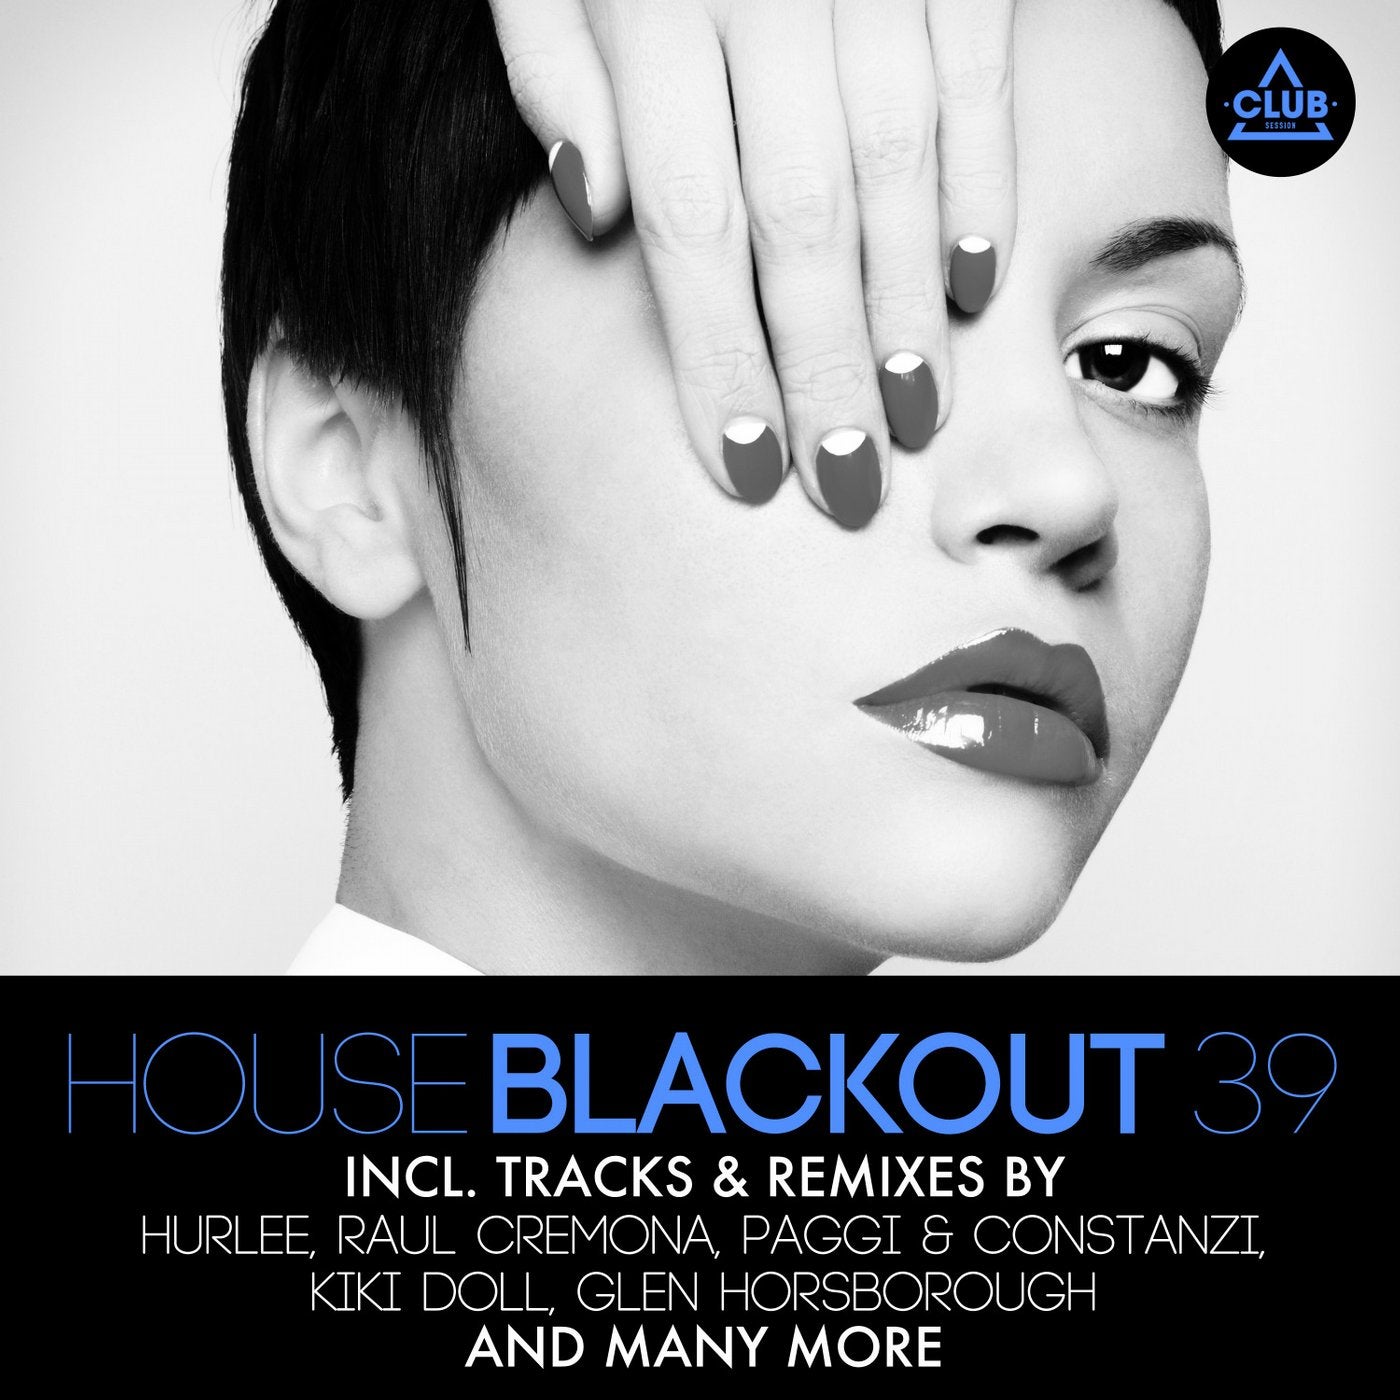 House Blackout Vol. 39